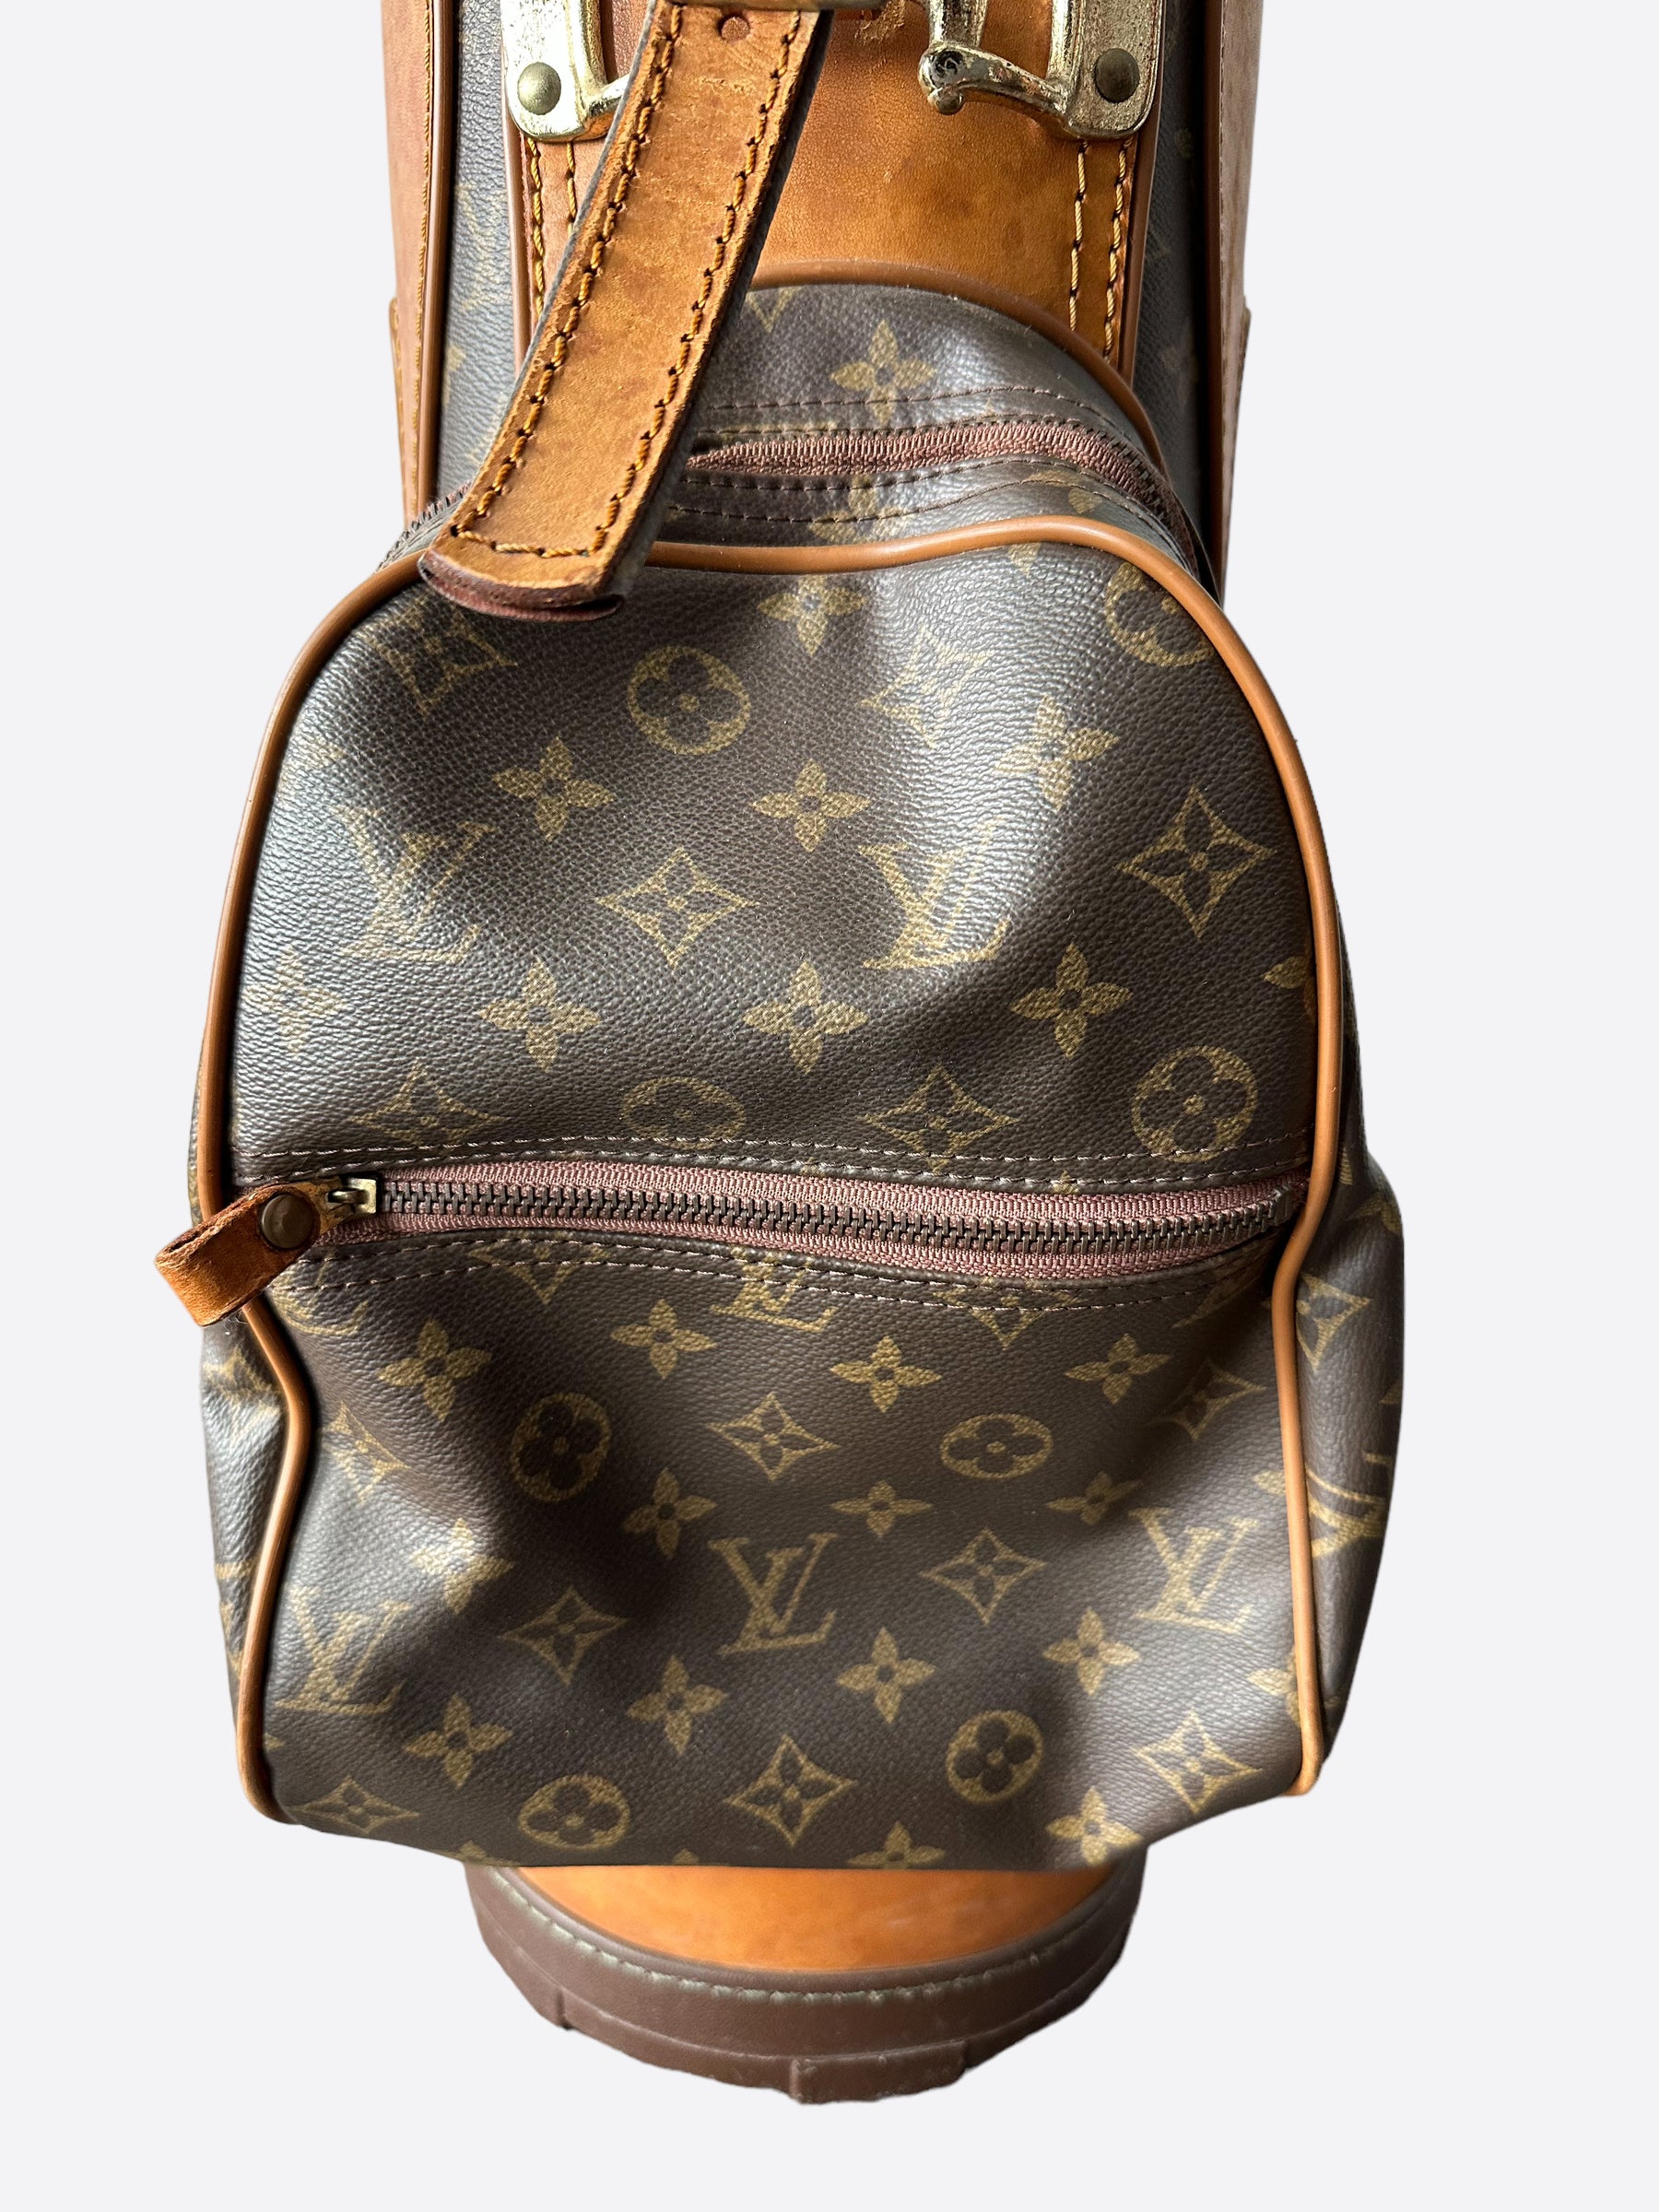 Front Office Sports on Twitter DJ Khaled uses Louis Vuittons signature golf  bag  that costs 22200 via djkhaled httpstcoh8snIFC1dE  X